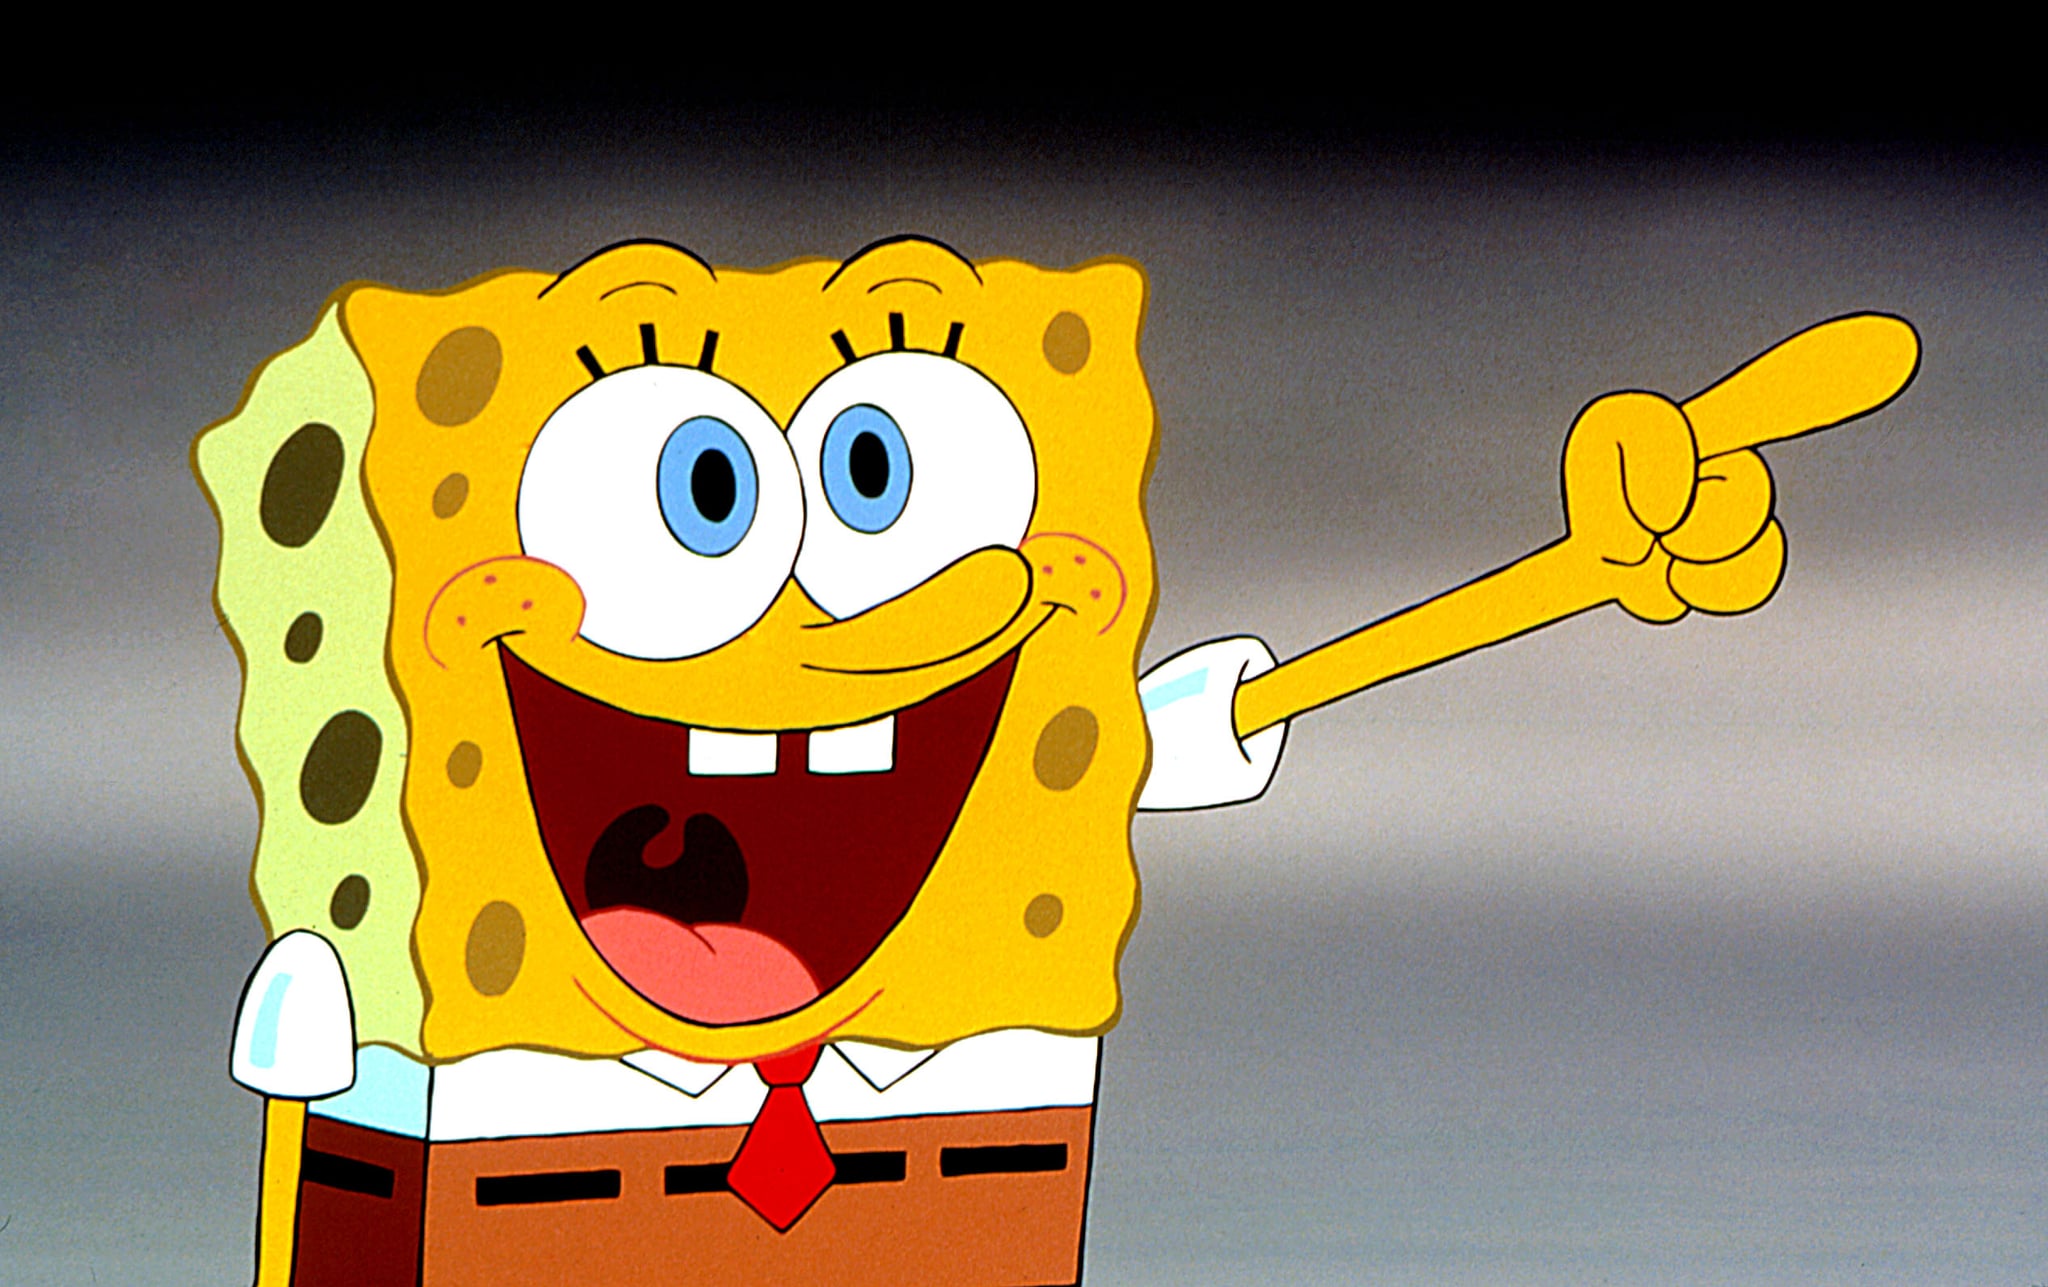 Spongebob Squarepants: The Inspiration